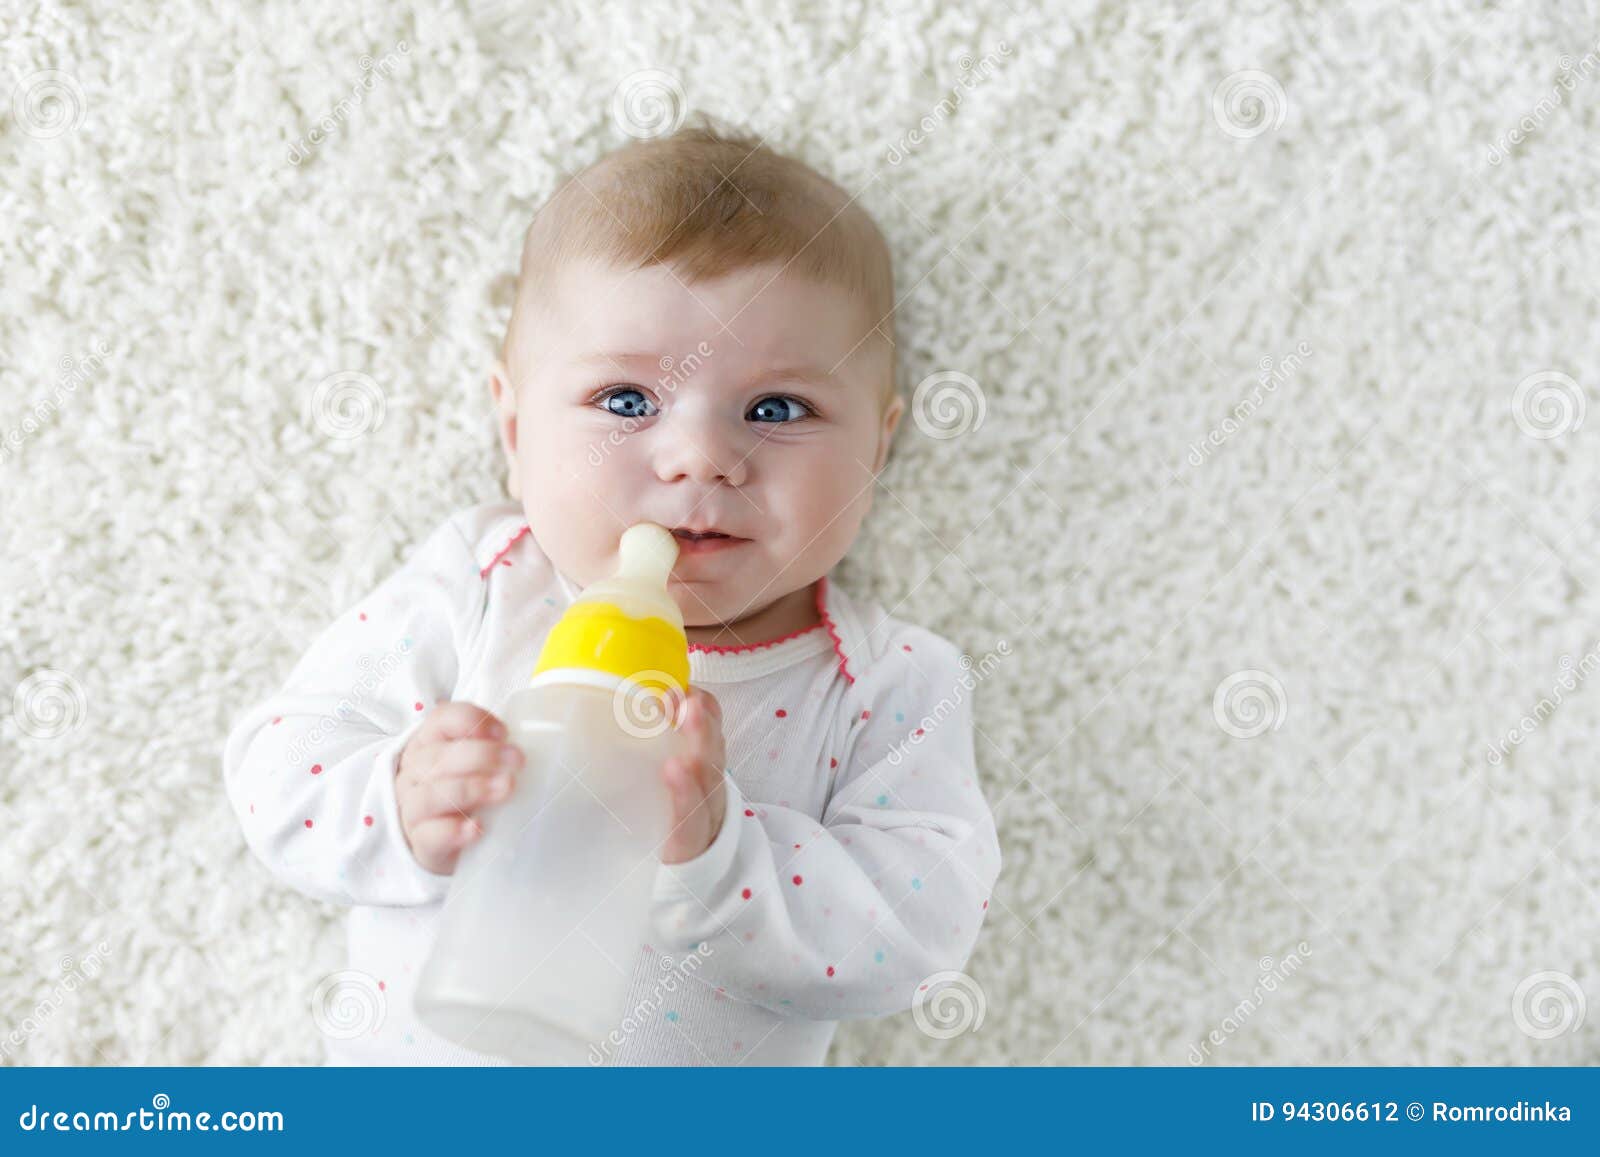 cute adorable ewborn baby girl holding nursing bottle and drinking formula milk